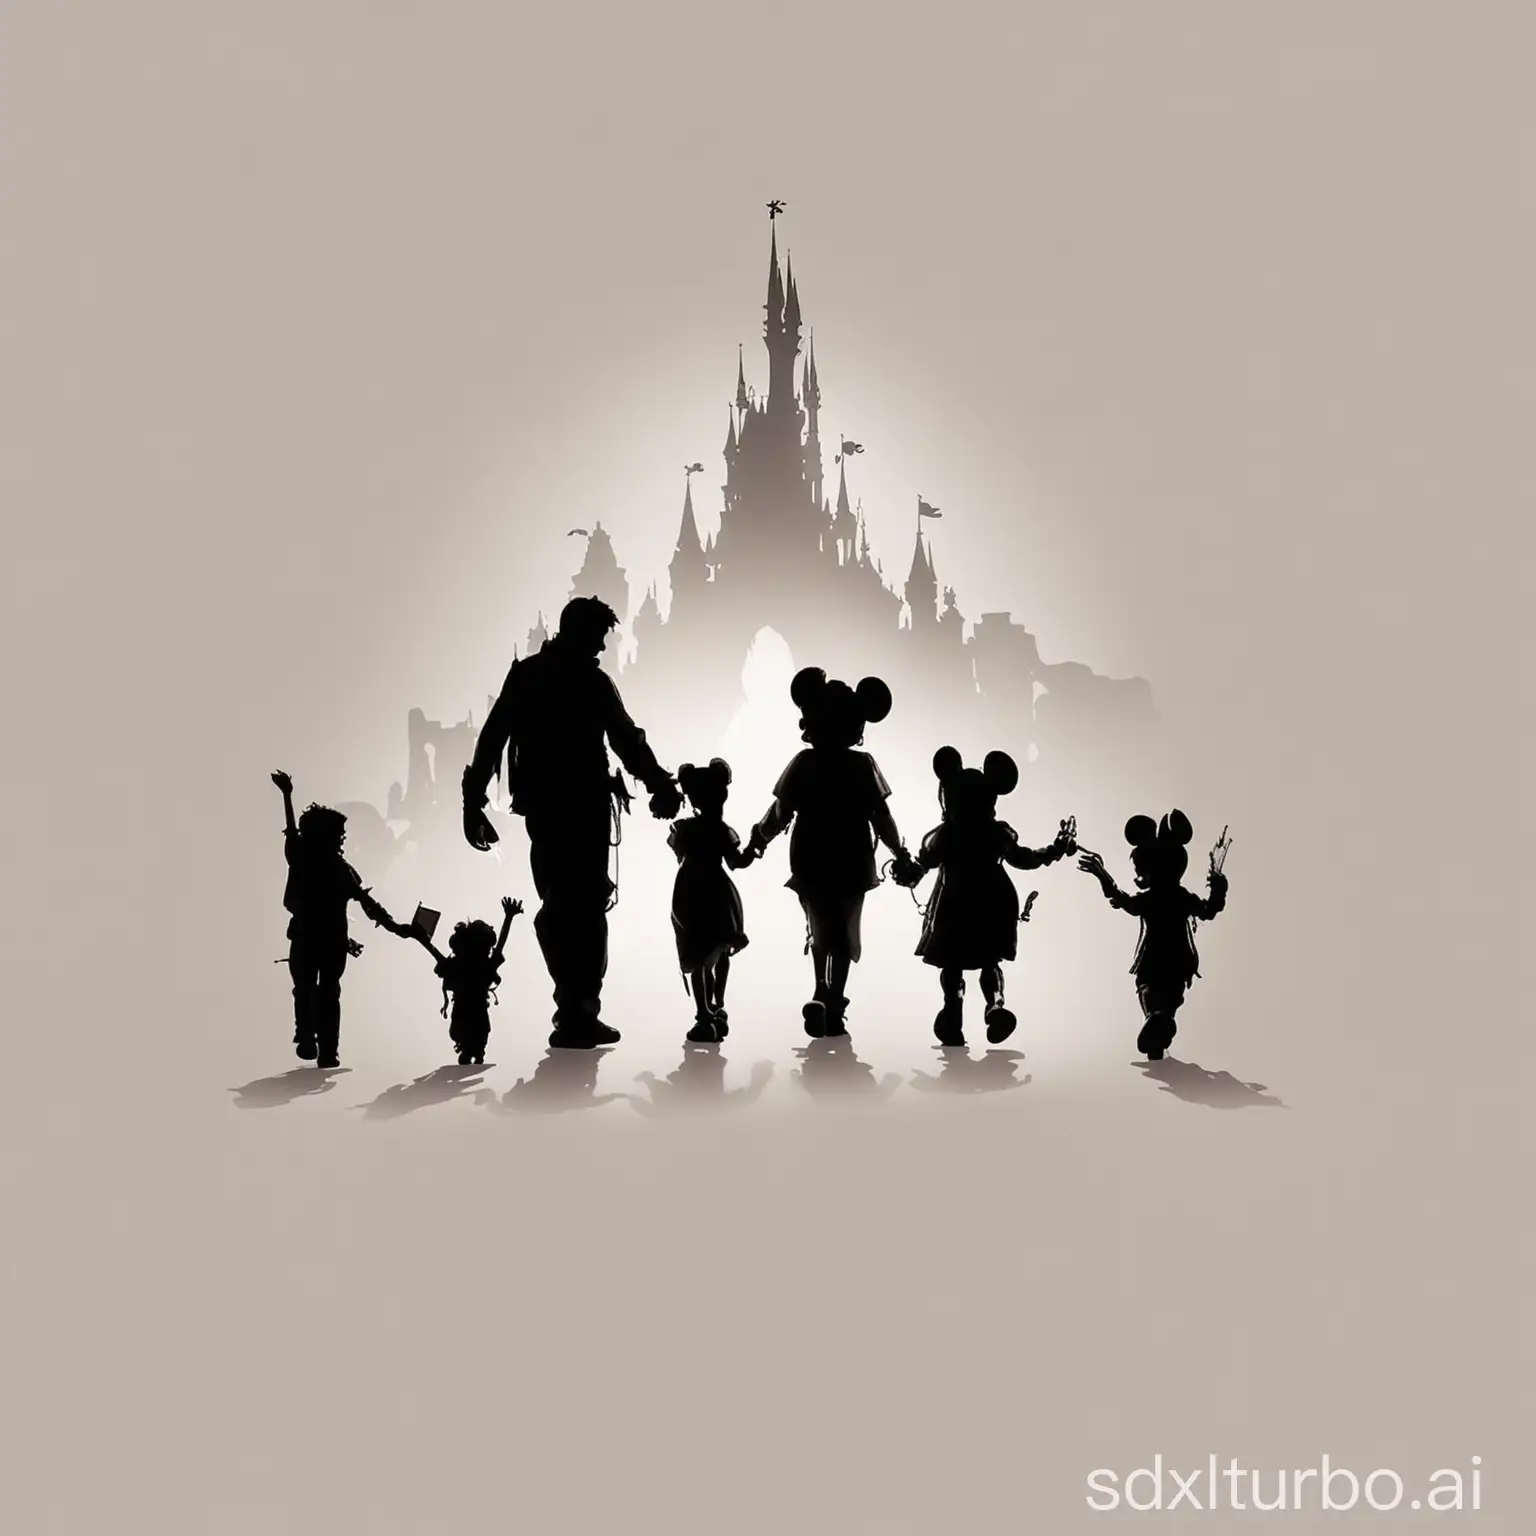 Personajes de Disney walking hand in hand towards Disneyland, silhouettes, simple white background